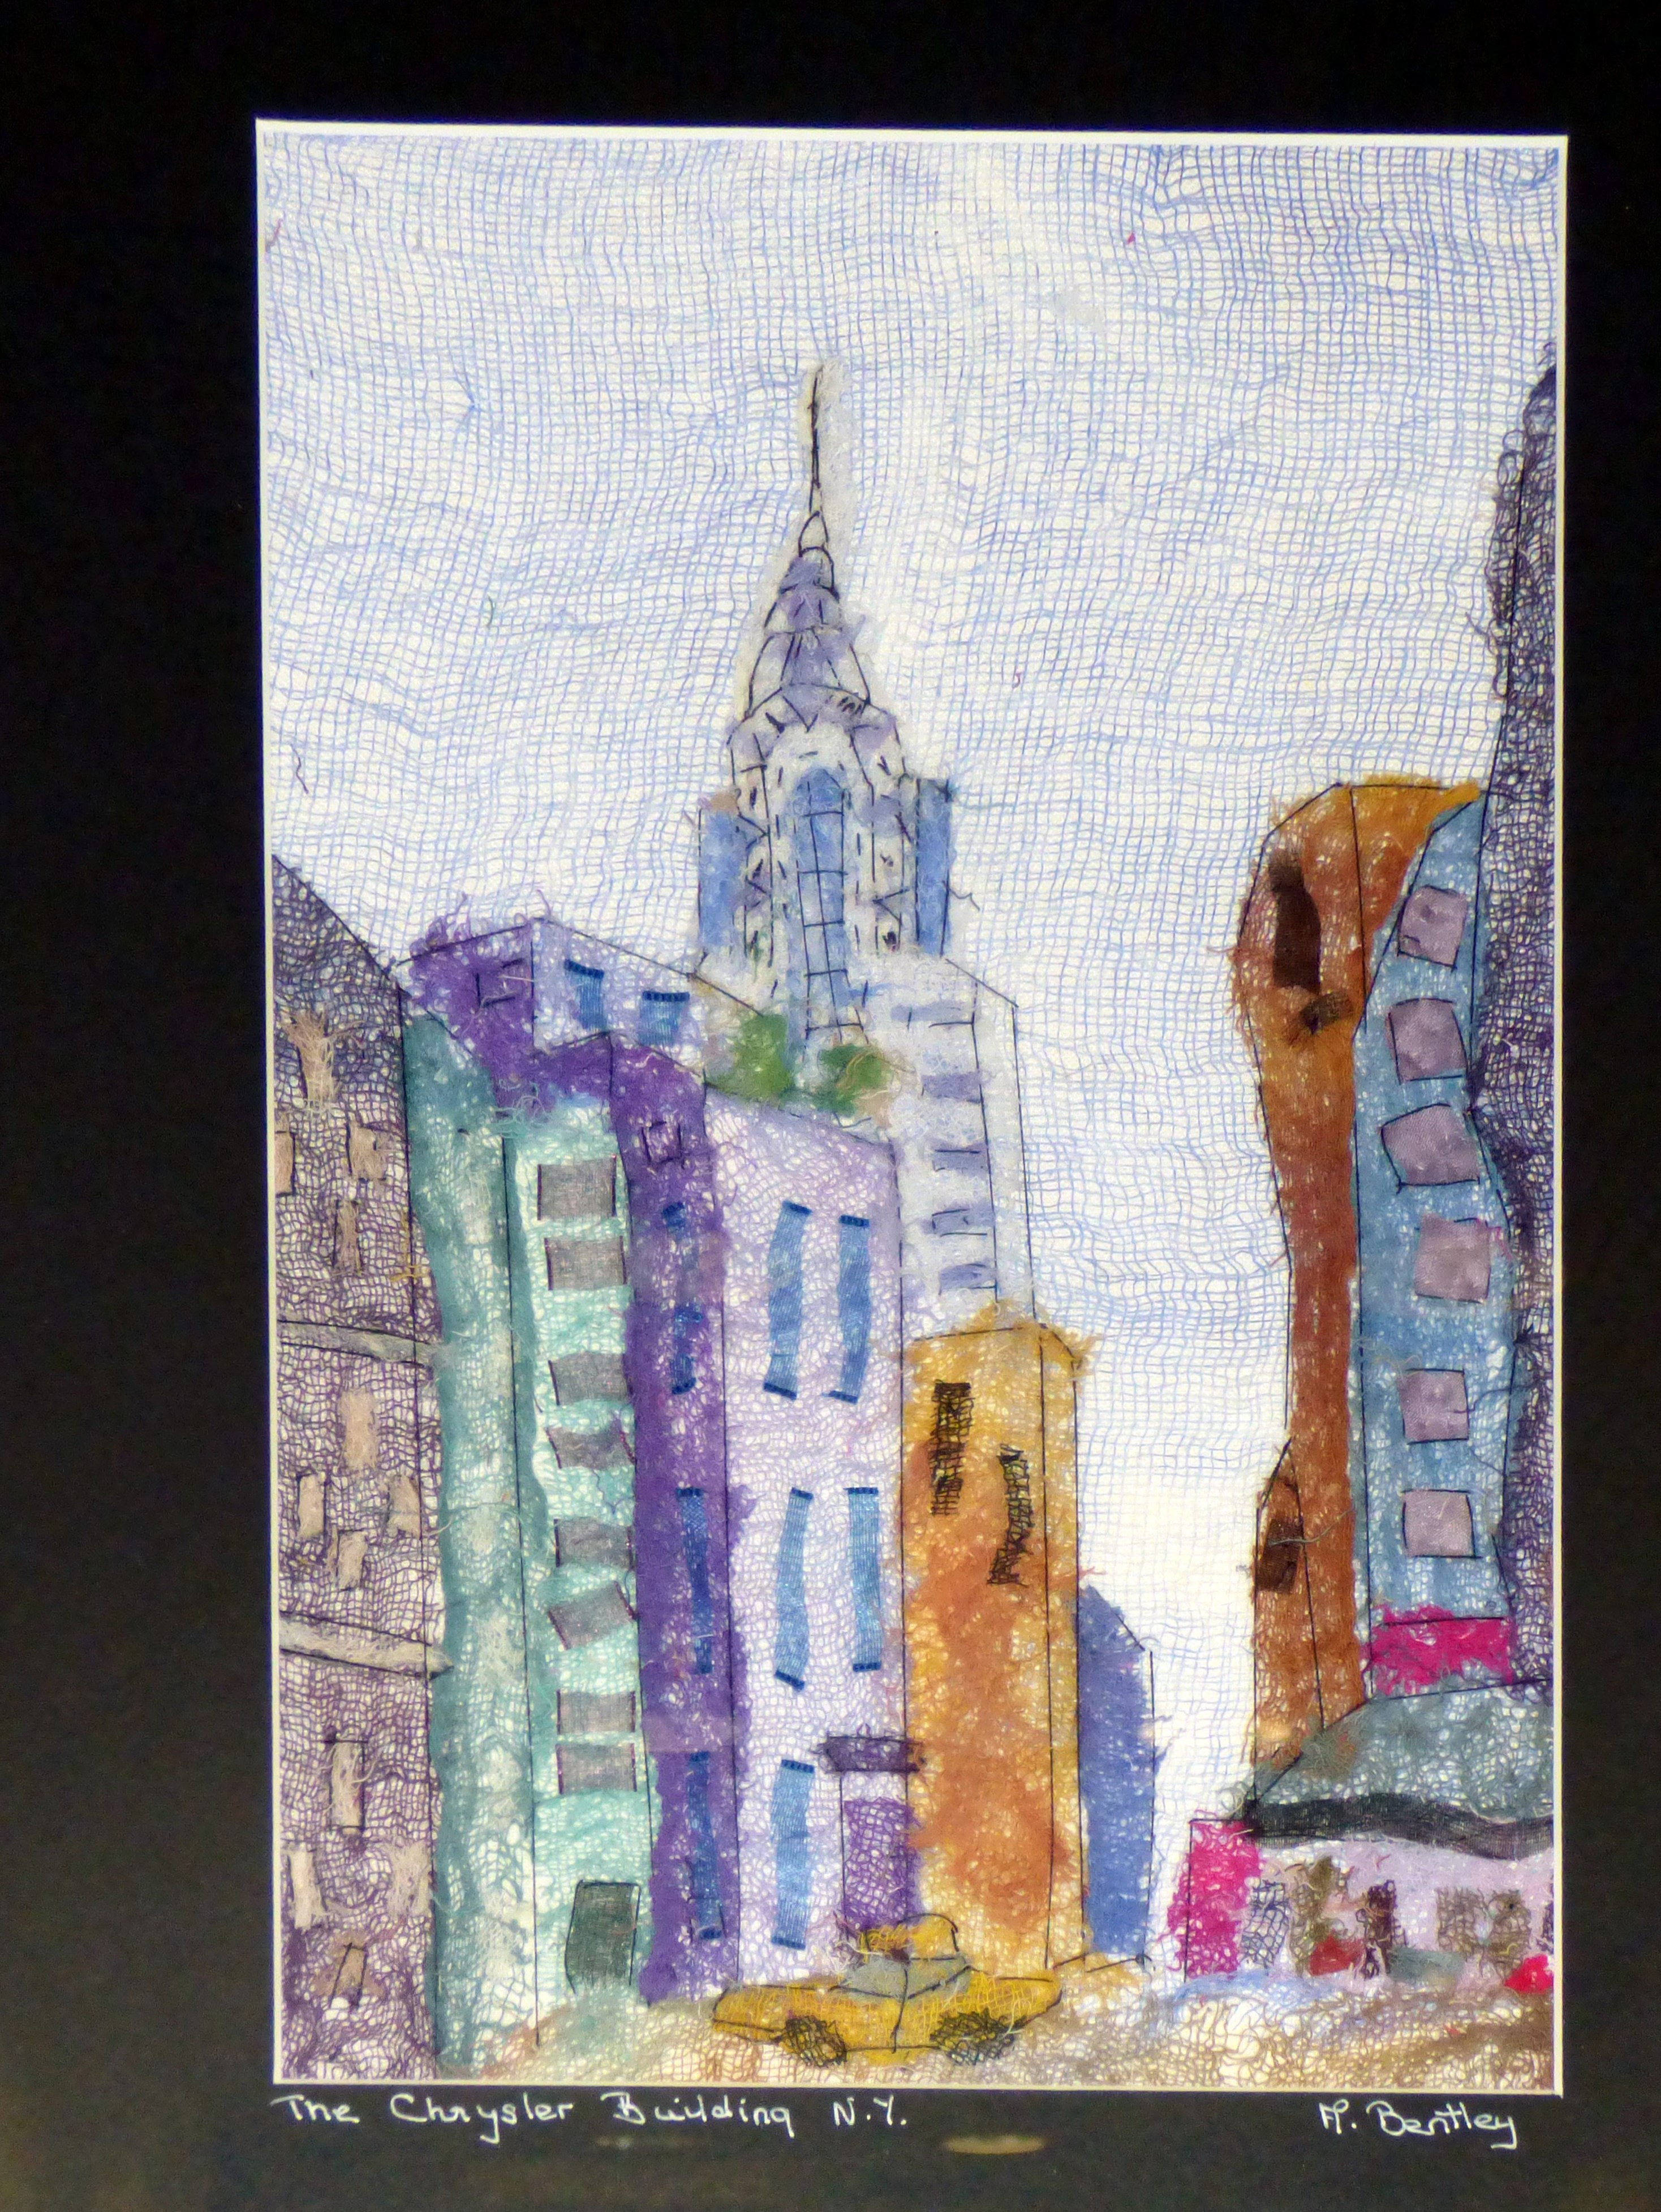 THE CHRYSLER BUILDING, NEW YORK by Mavis Bentley, hand embroidery in scrim & silk thread, Ten Plus @ The Atkinson, 2018